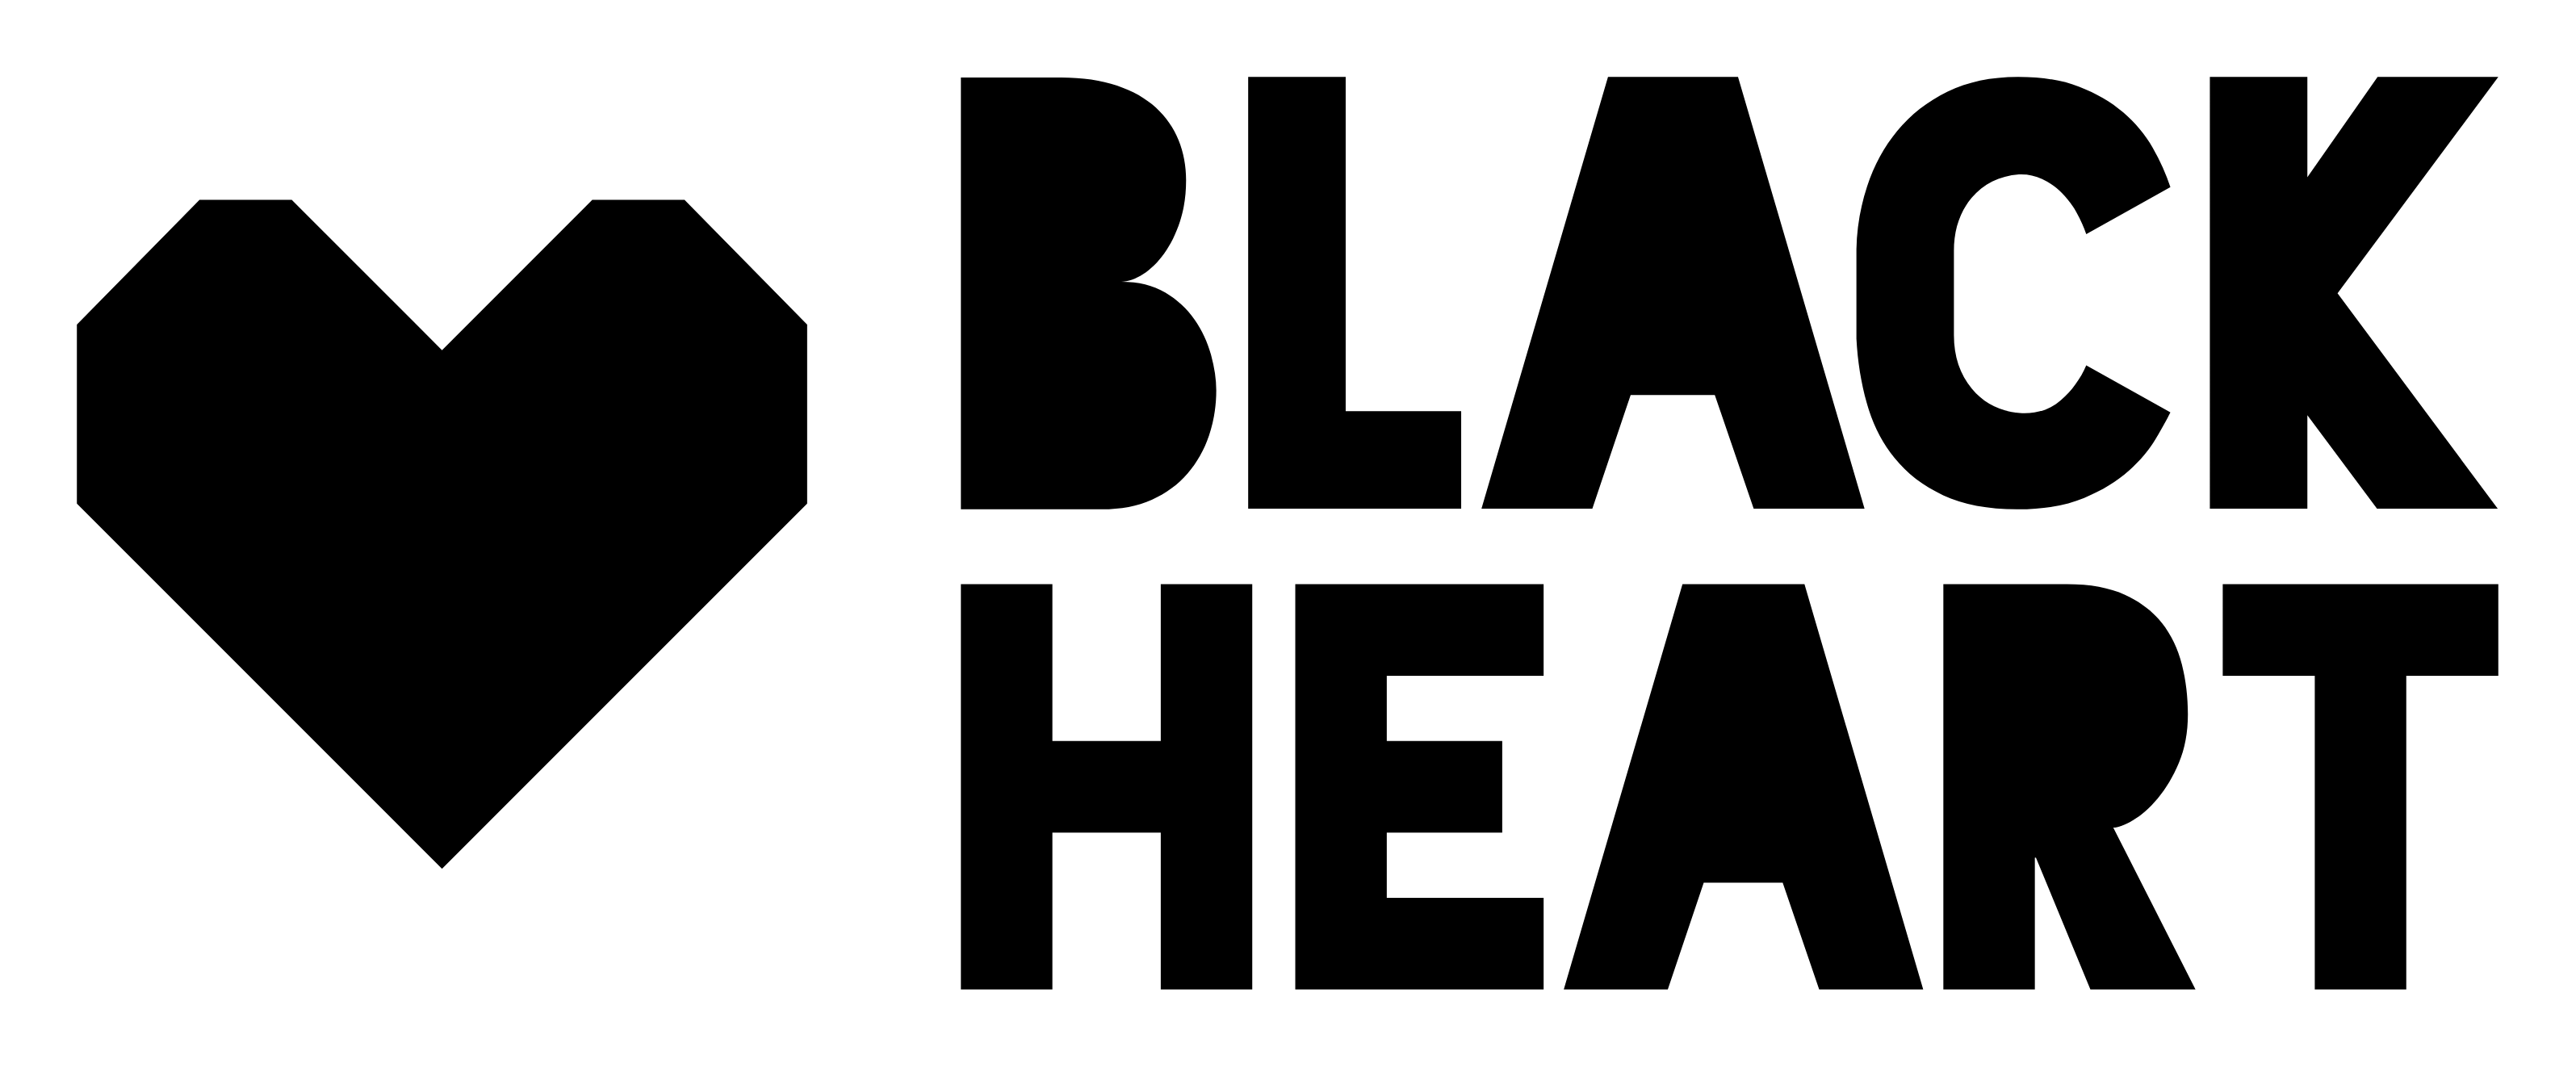 black heart logo